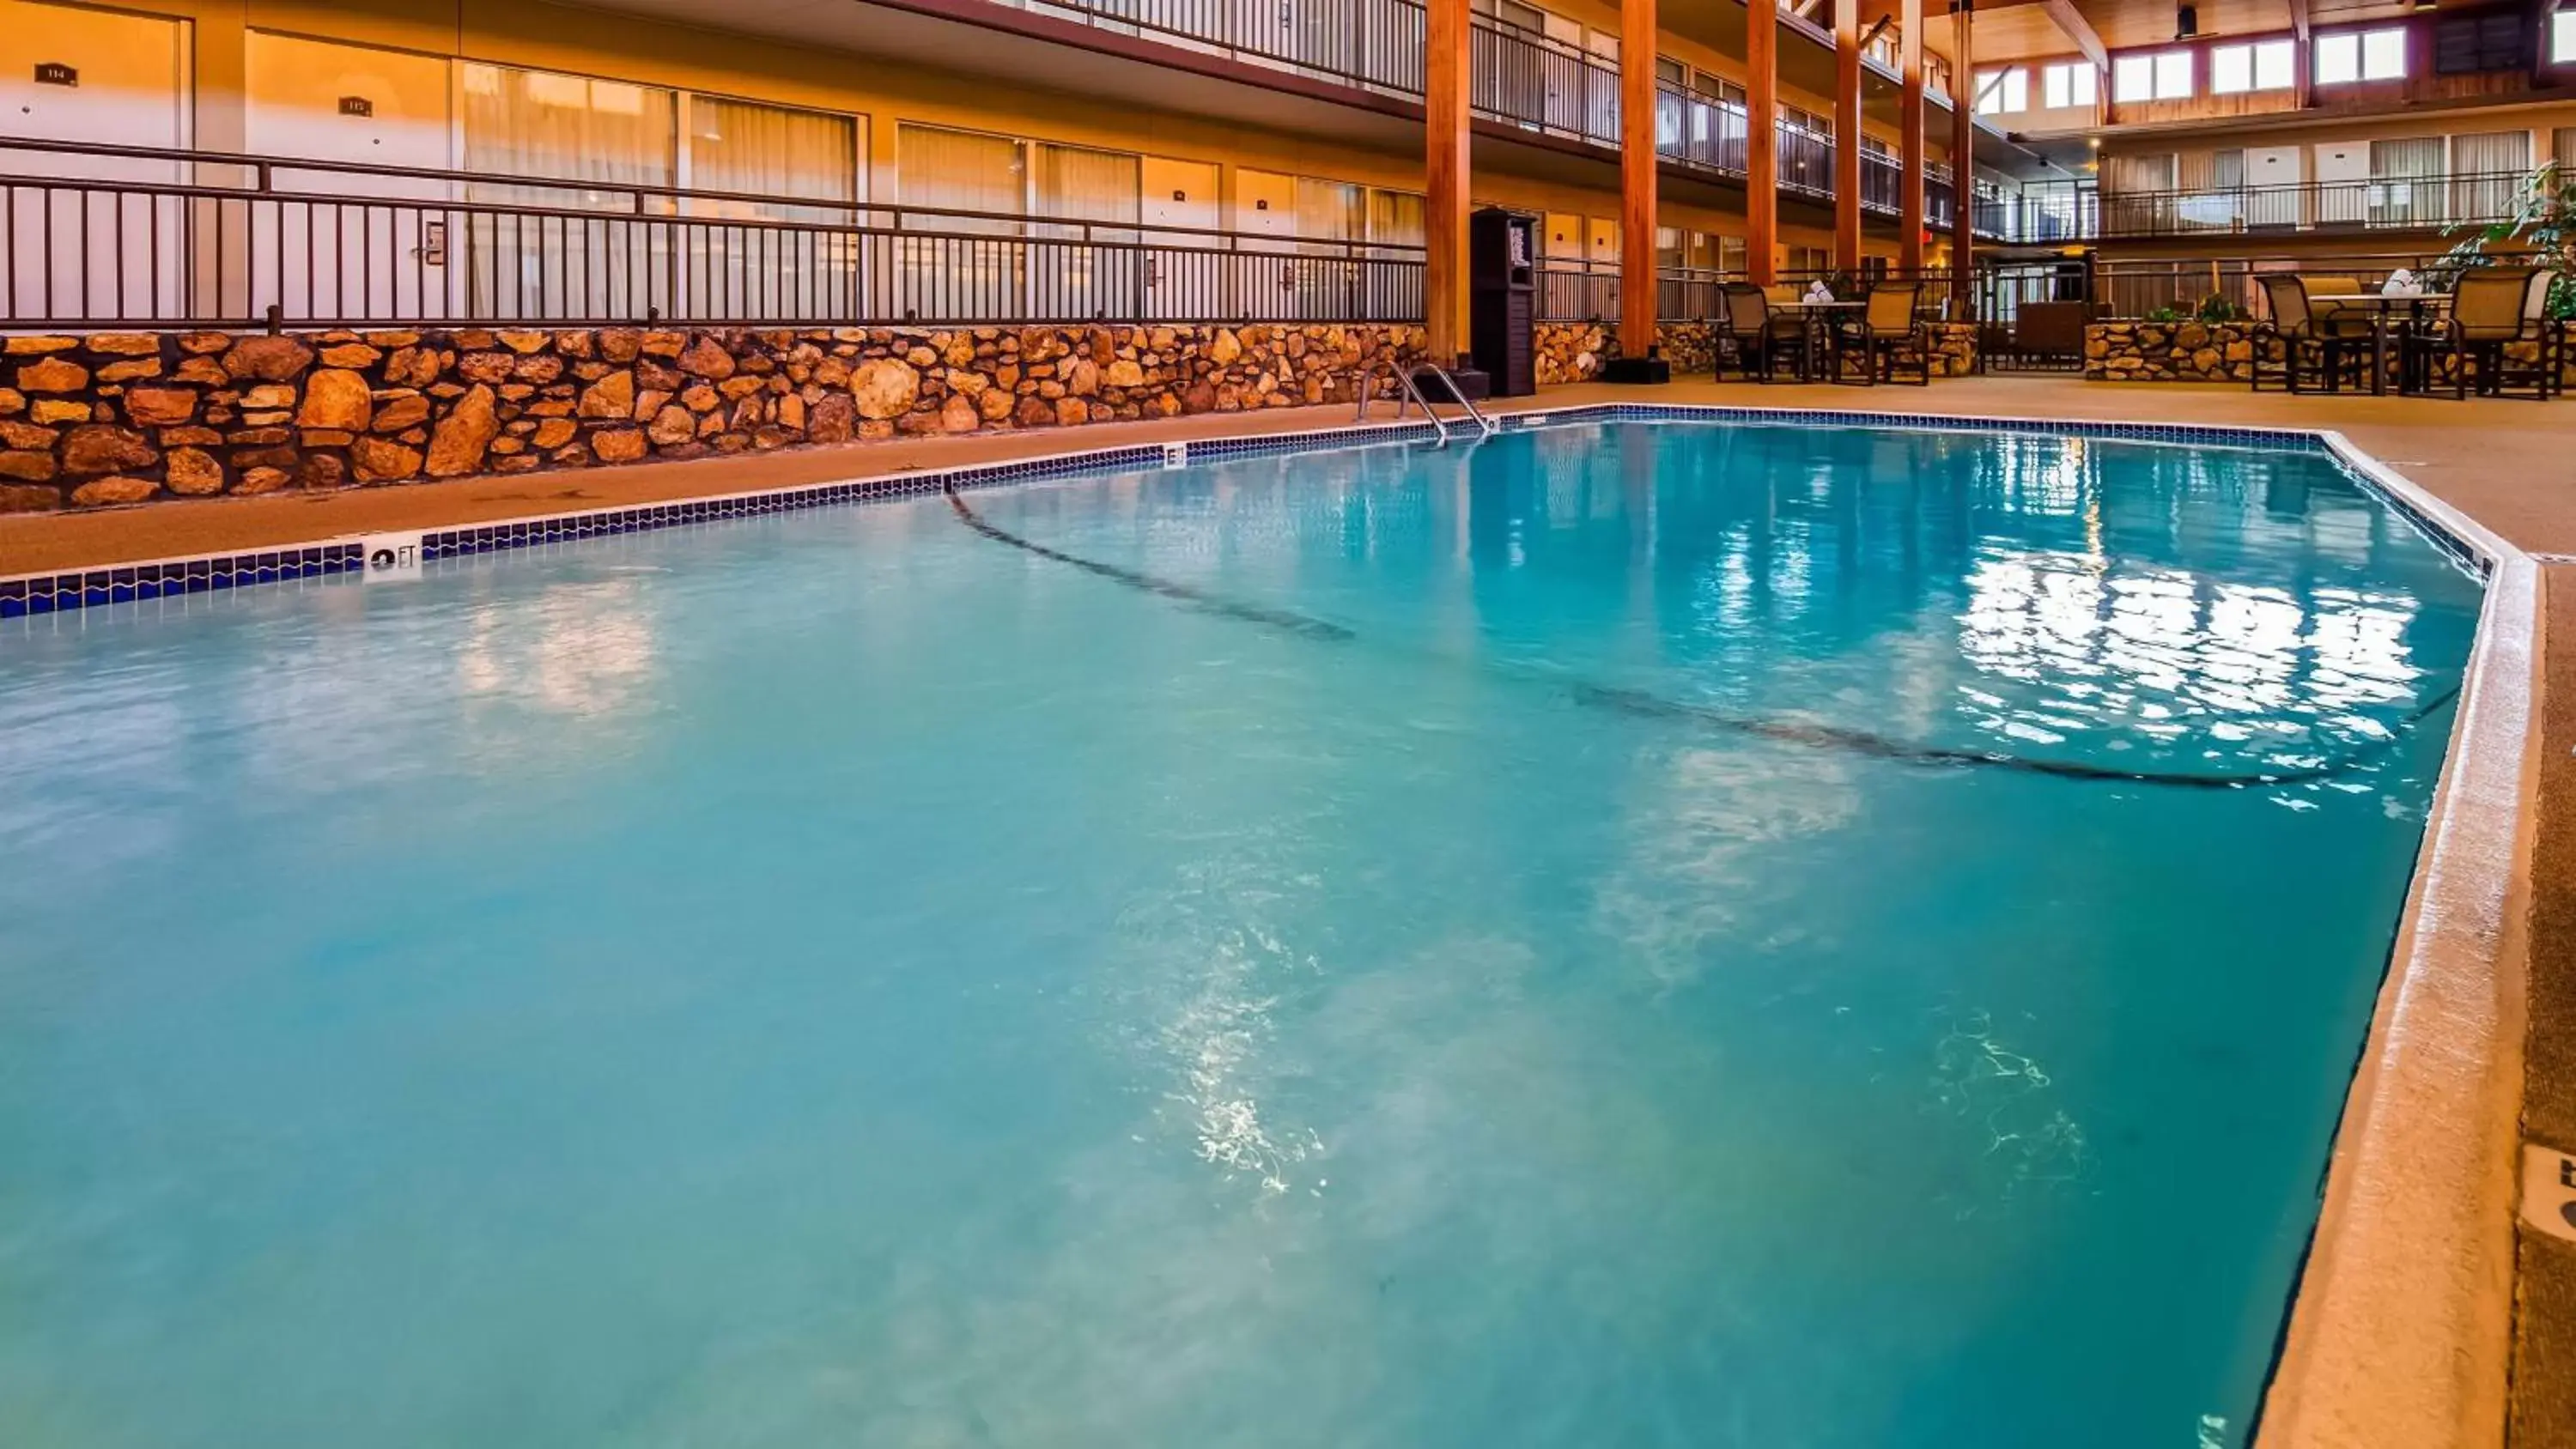 On site, Swimming Pool in Best Western State Fair Inn